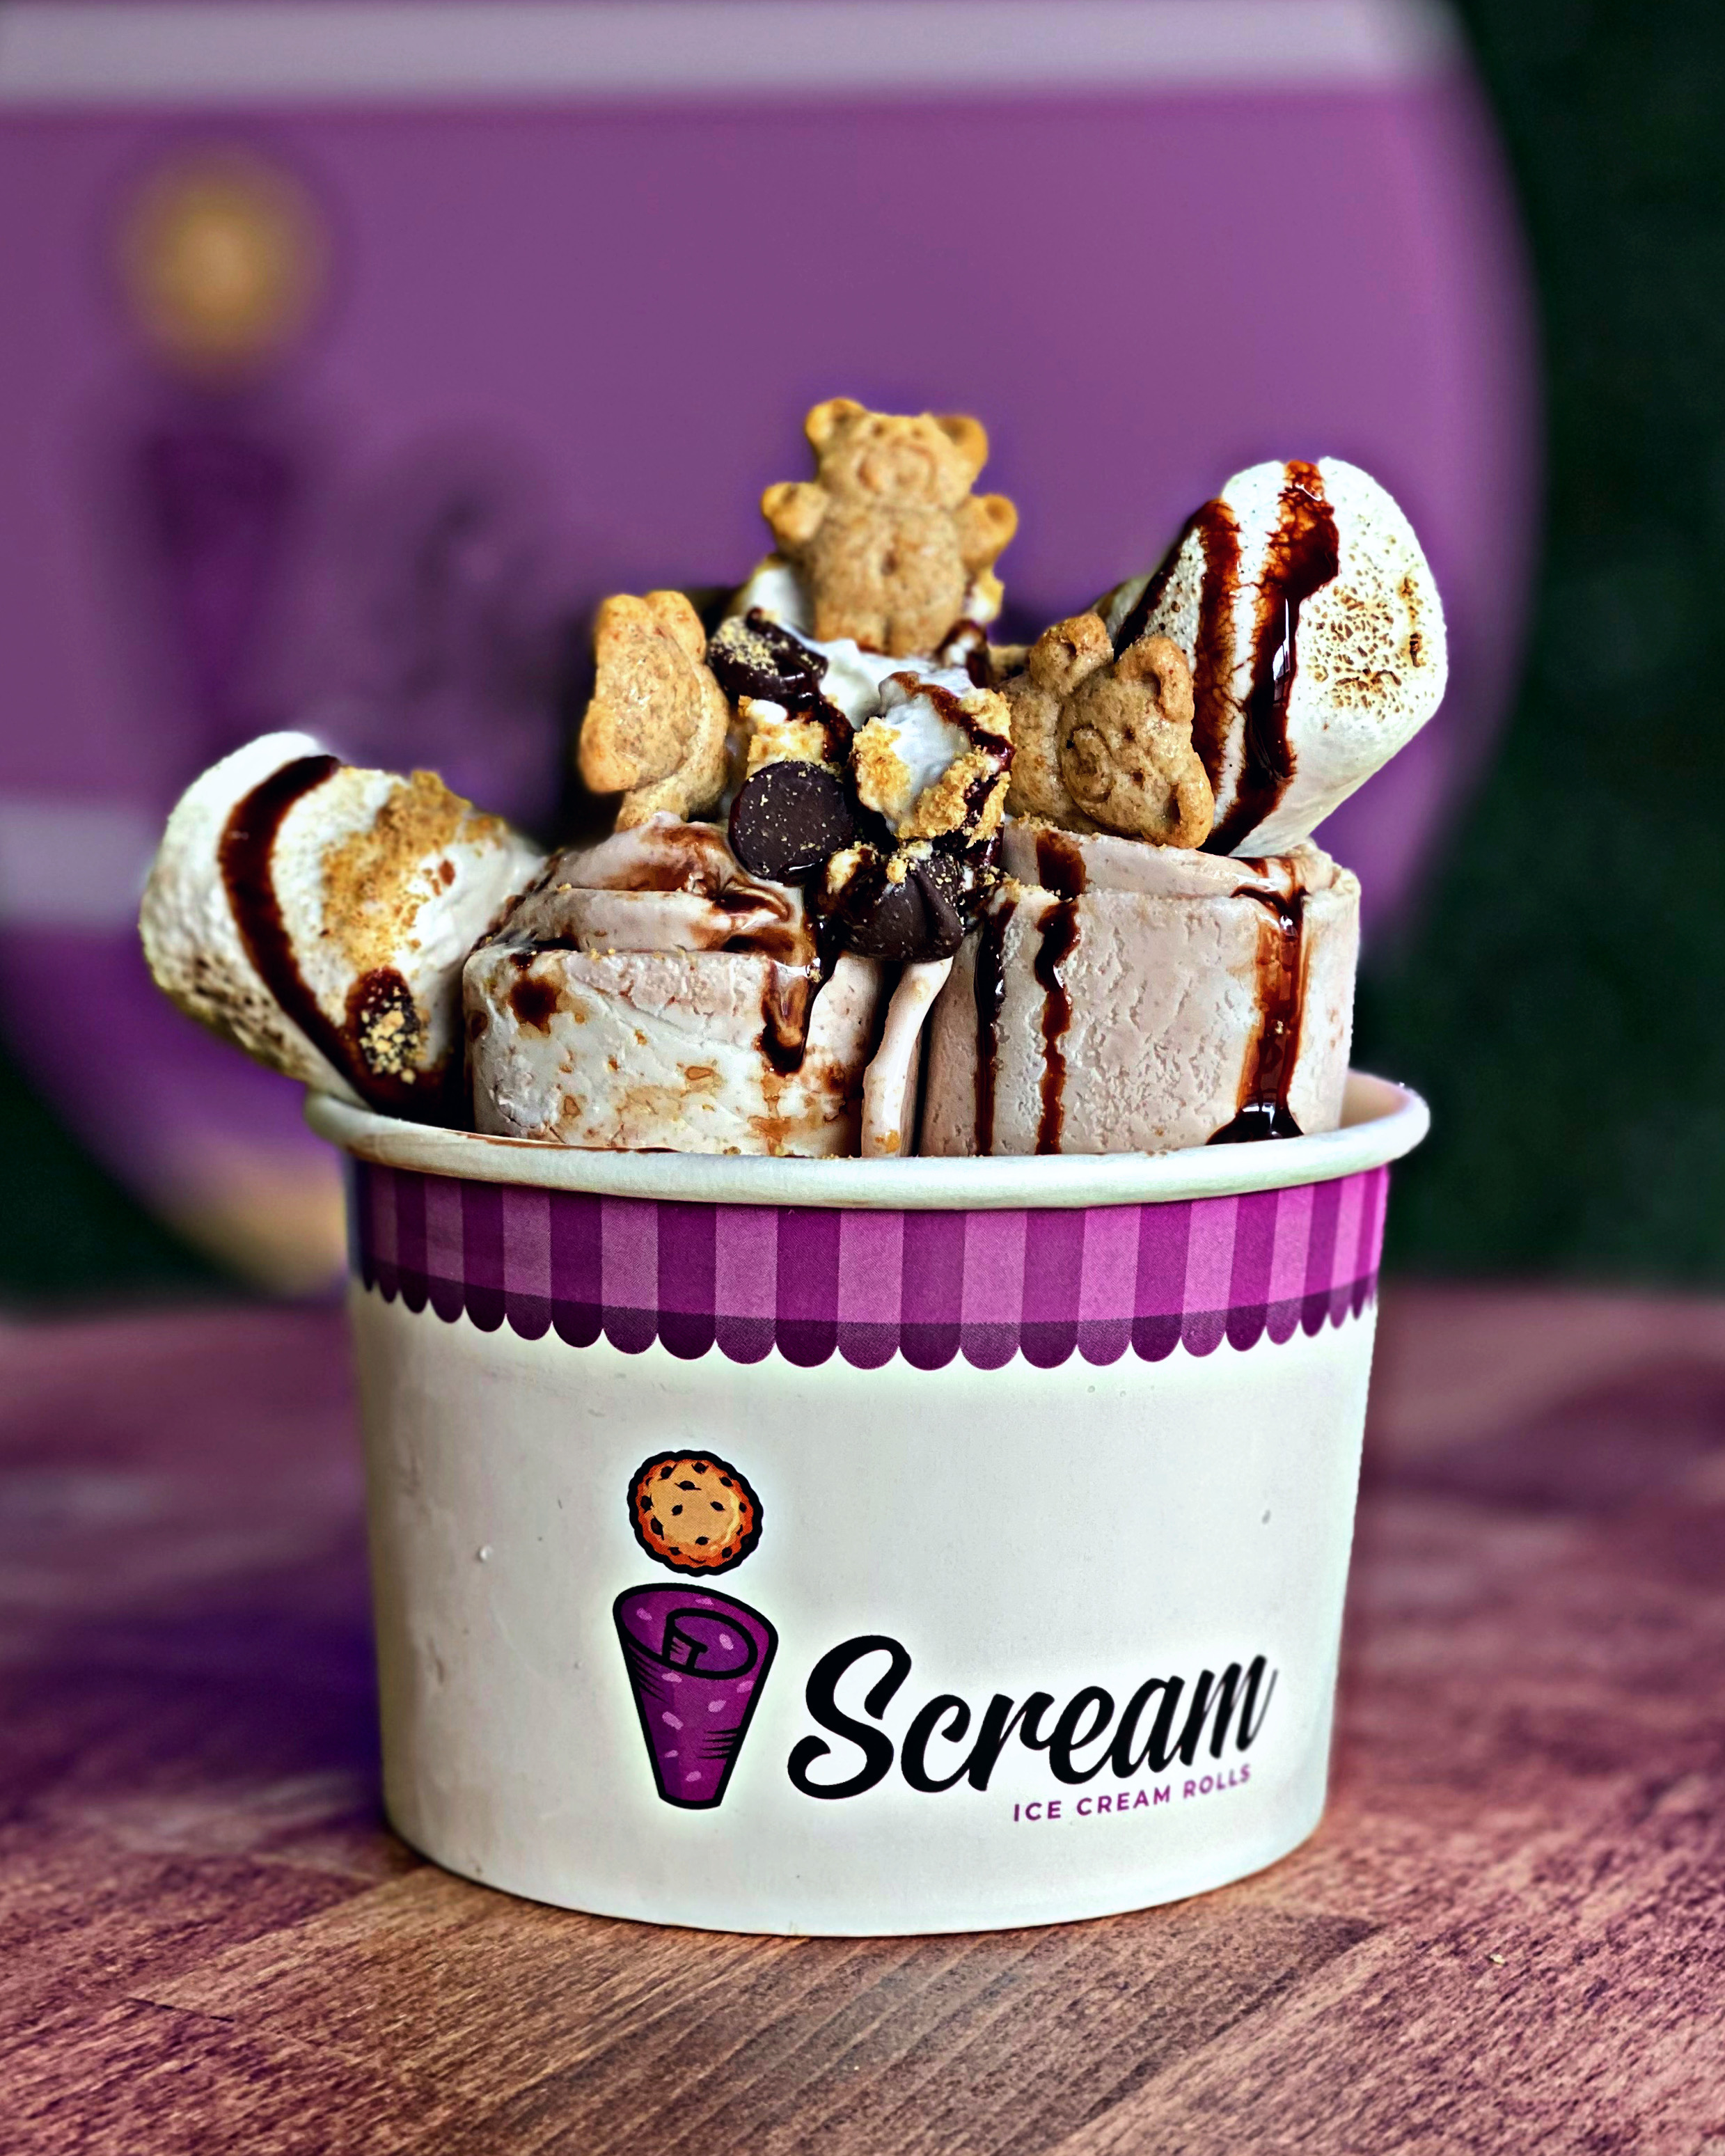 IScream Ice Cream Serves Up Hope During Covid Crisis